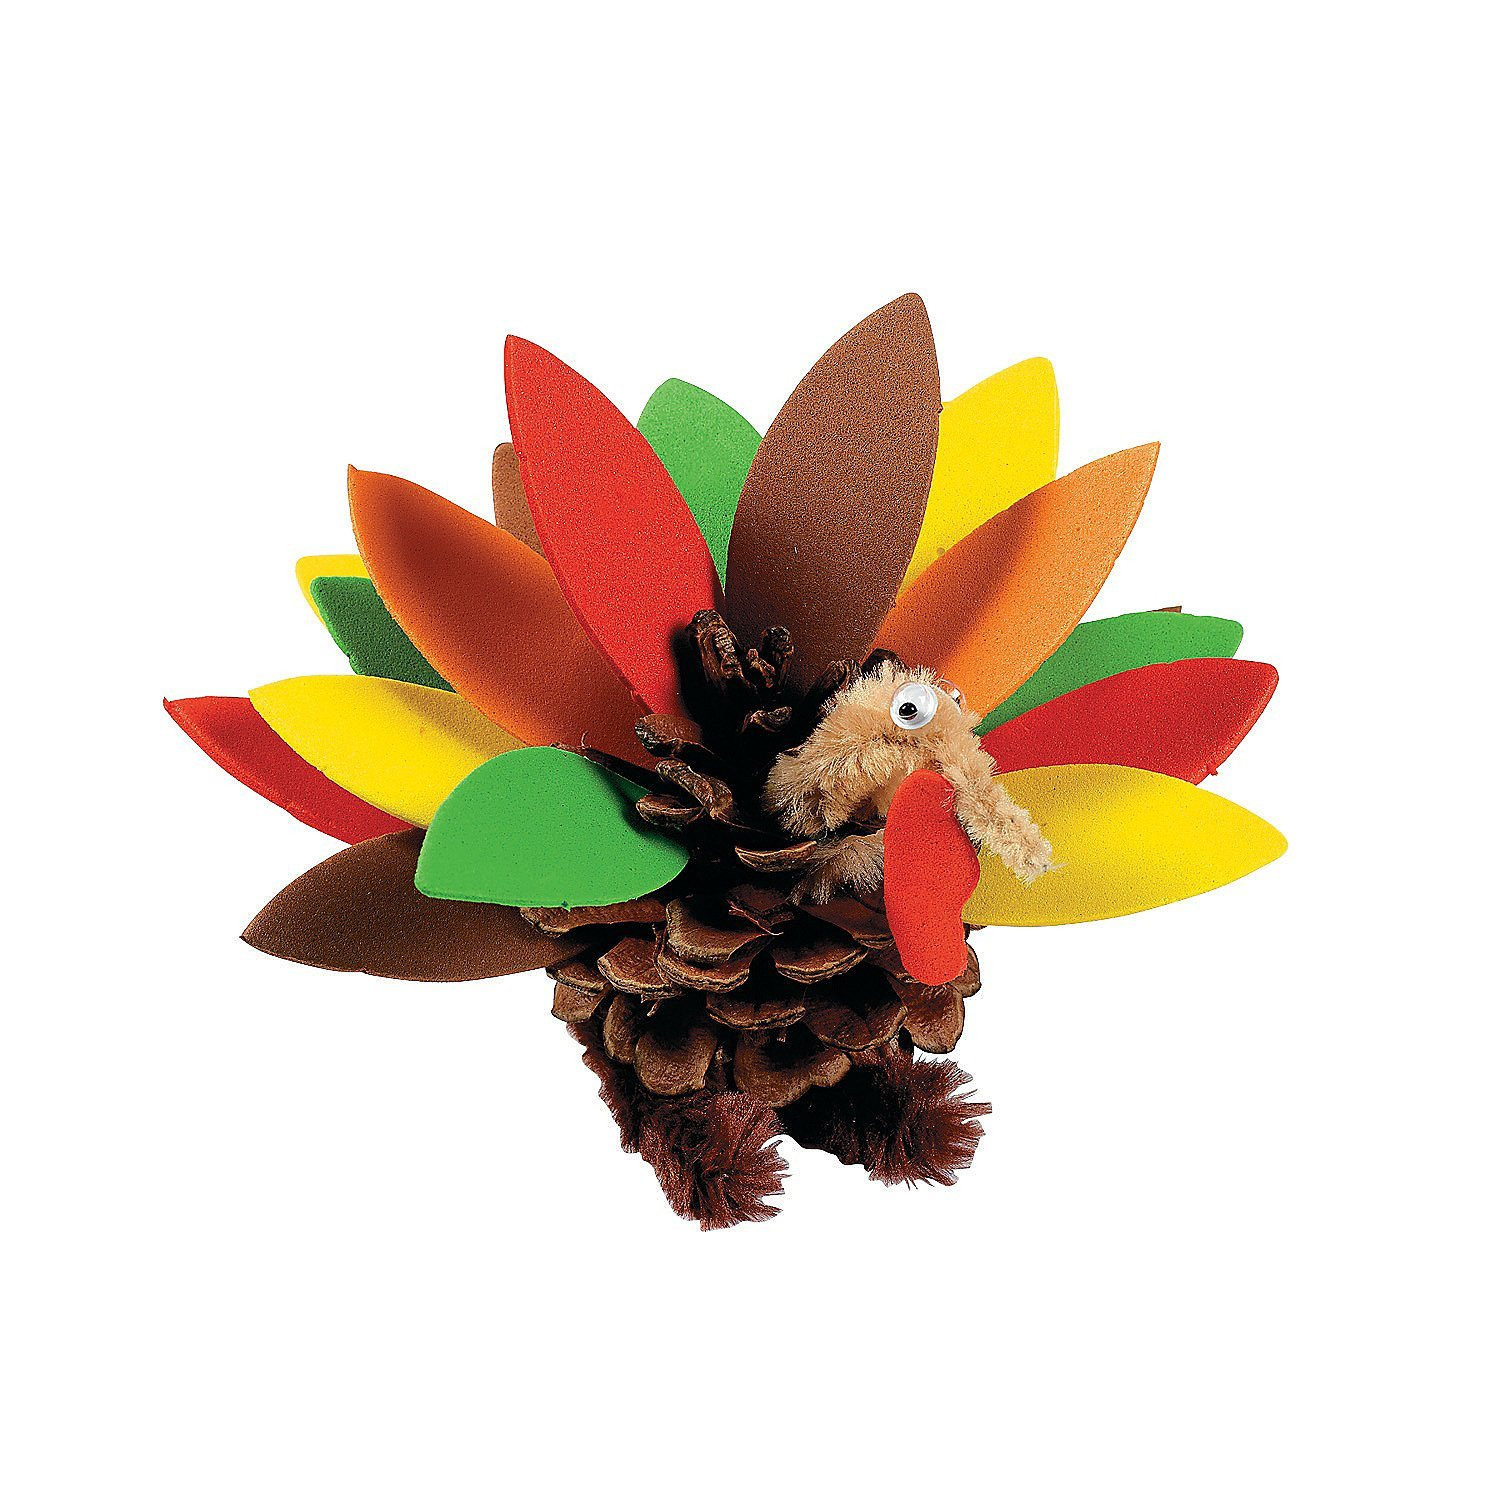 Thanksgiving Turkey Craft
 20 of The Best Thanksgiving Turkey Crafts for Kids To Make